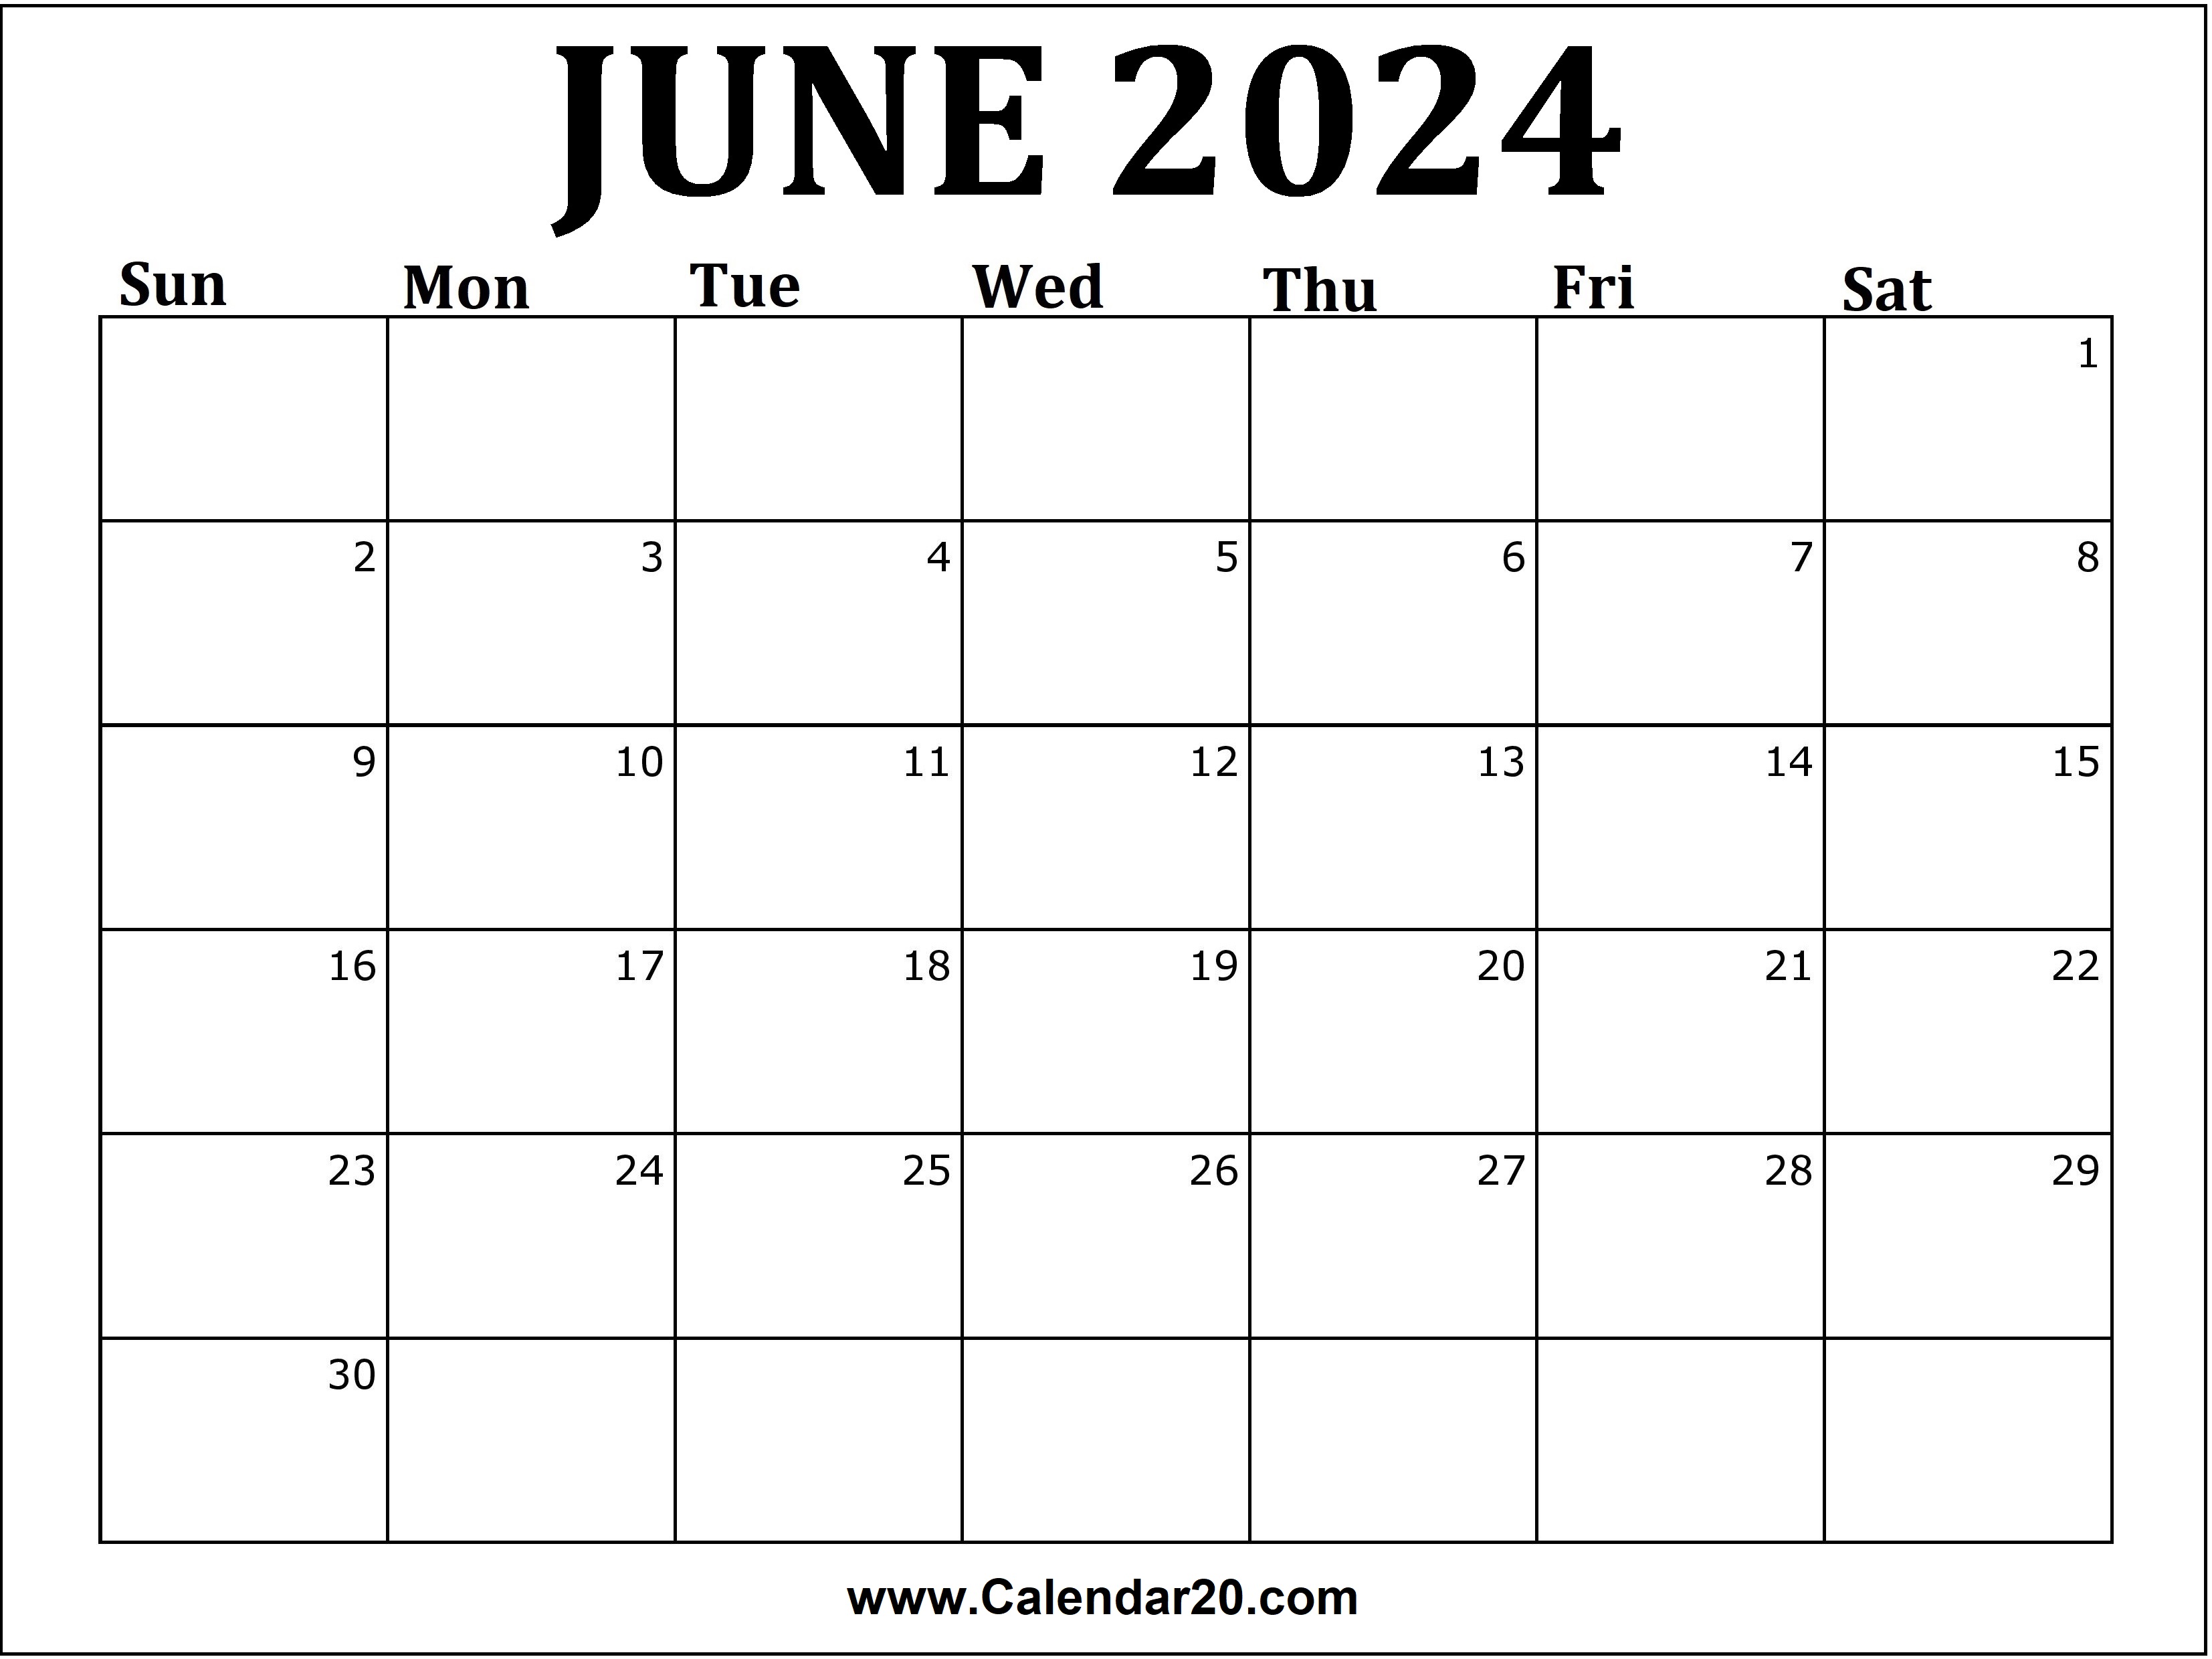 june-2024-calendar-printable-calendar20